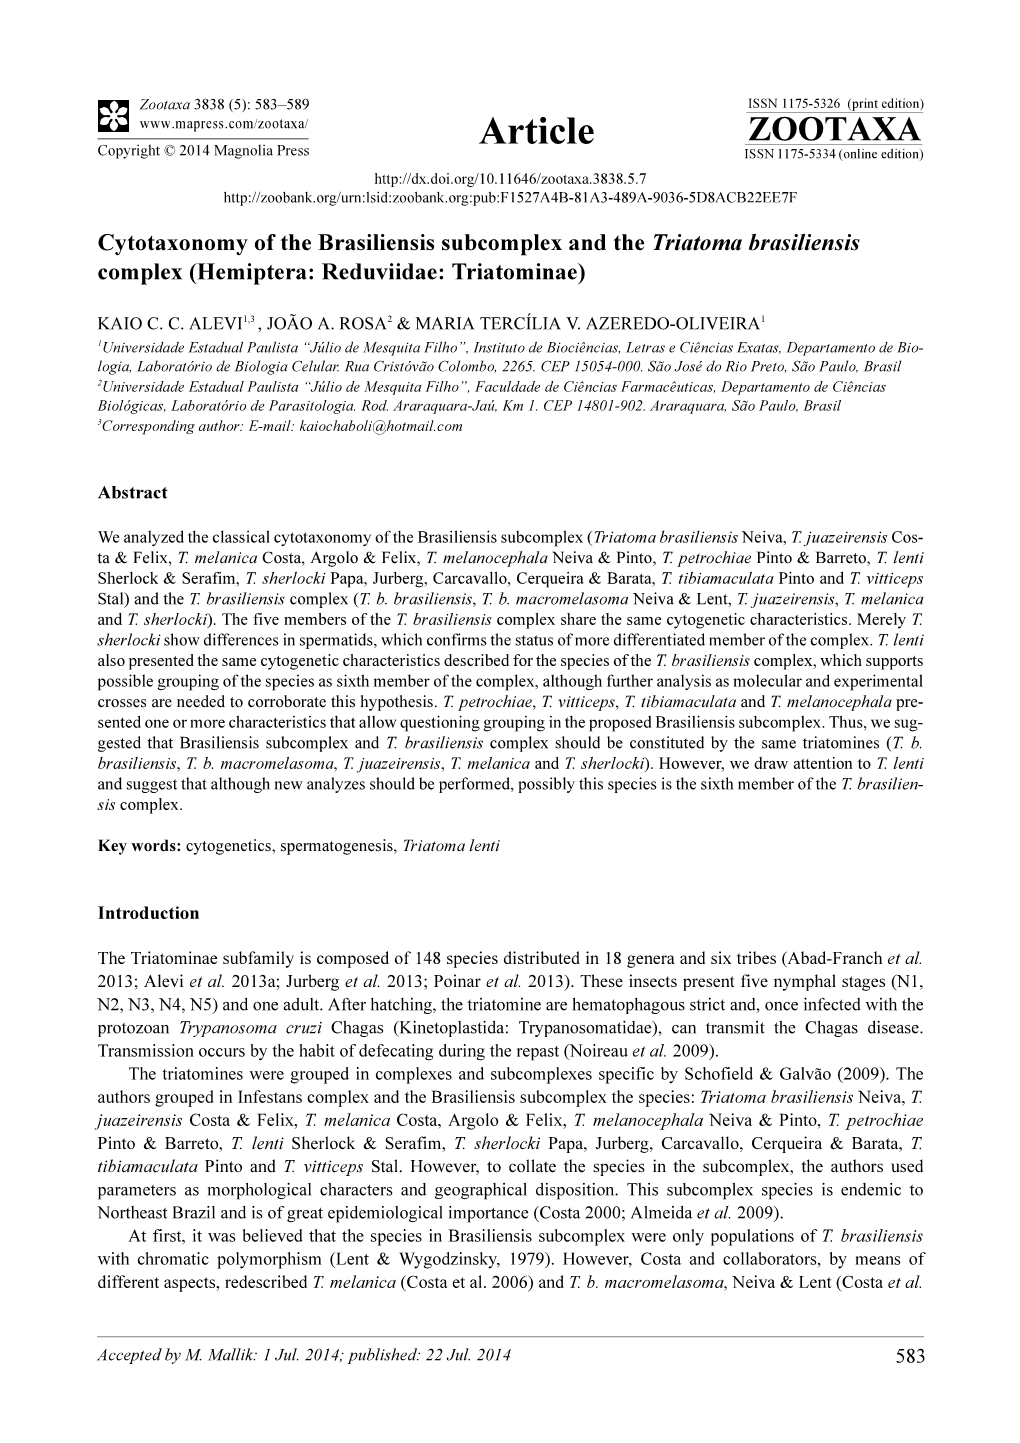 Cytotaxonomy of the Brasiliensis Subcomplex and the Triatoma Brasiliensis Complex (Hemiptera: Reduviidae: Triatominae)